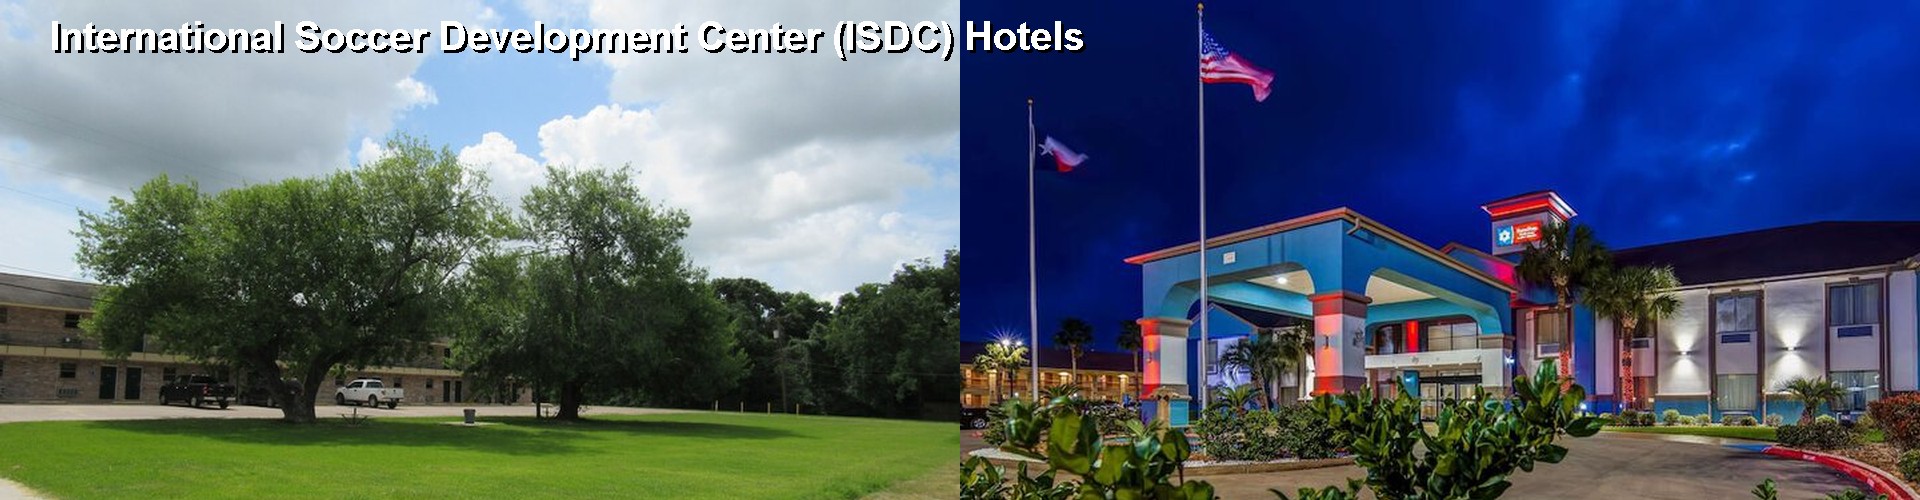 5 Best Hotels near International Soccer Development Center (ISDC)